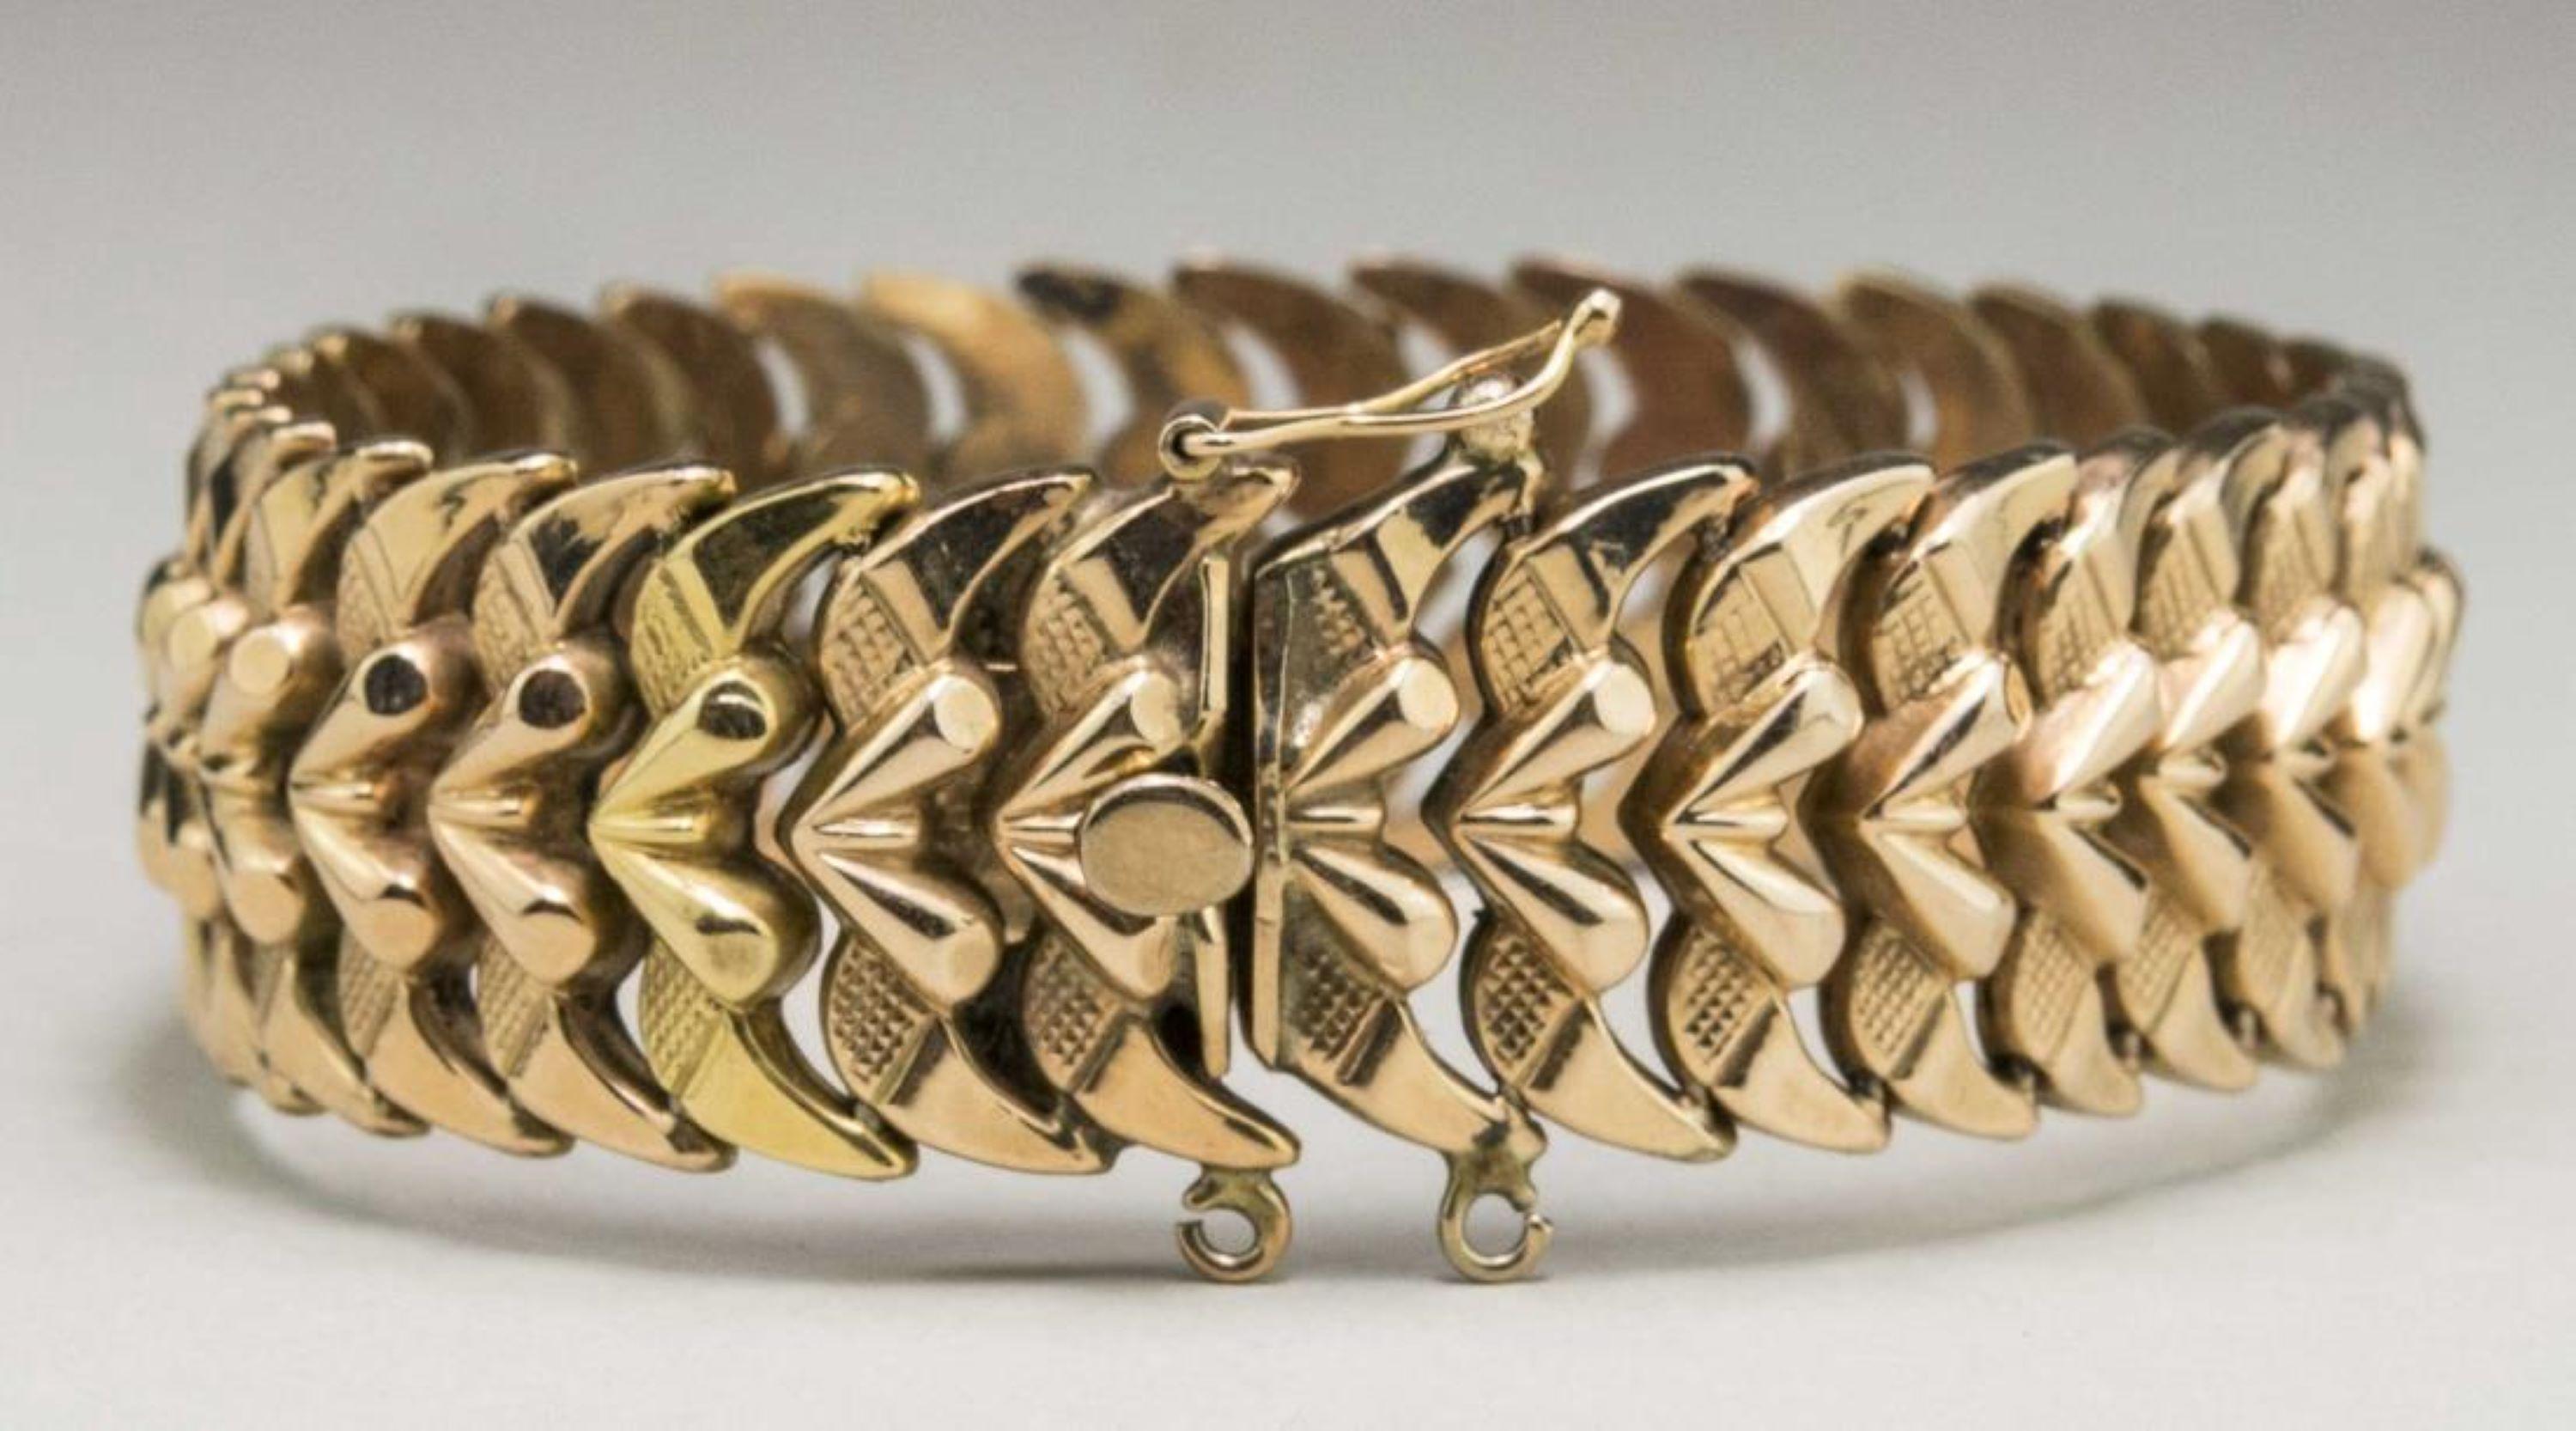 14k yellow gold fancy link bracelet. Length 7 1/2 inches, width 3/4 inch, 28.5 grams.